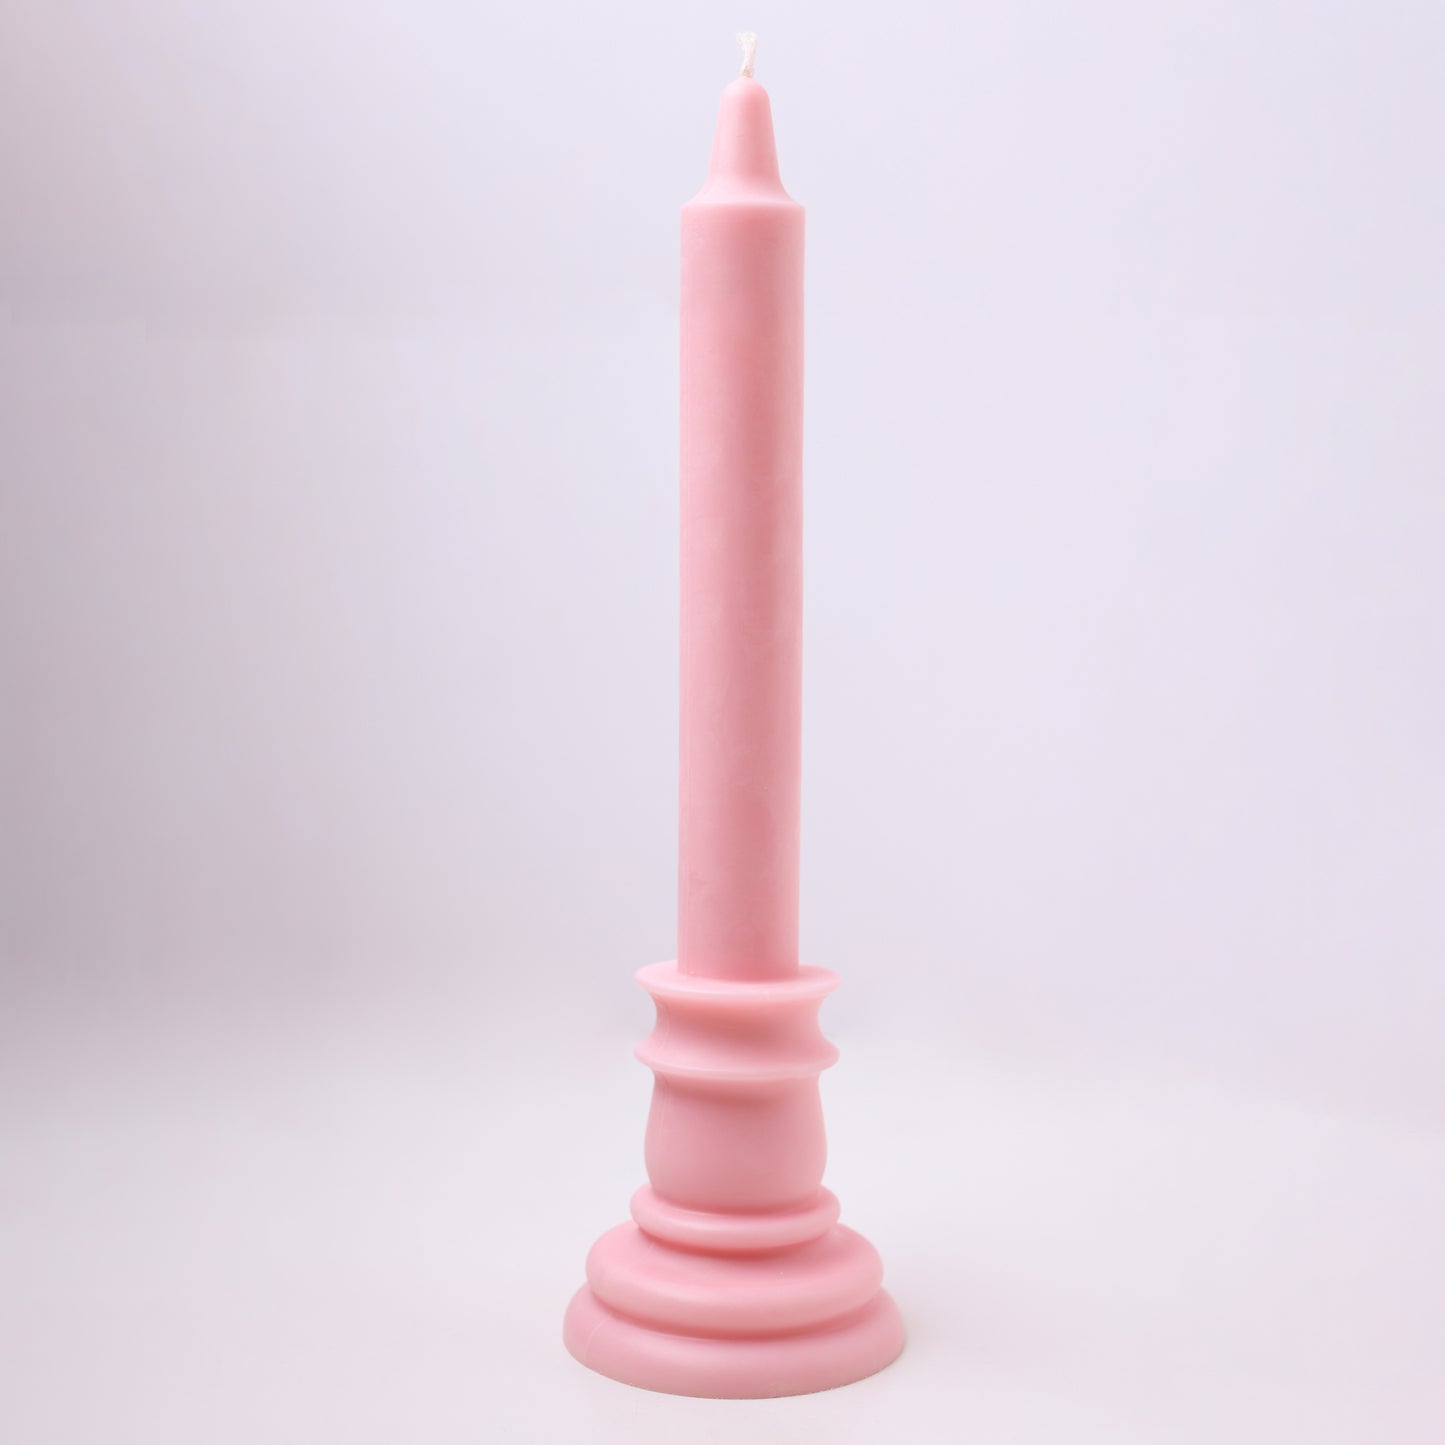 3altawleh Candle 30 cm Pink